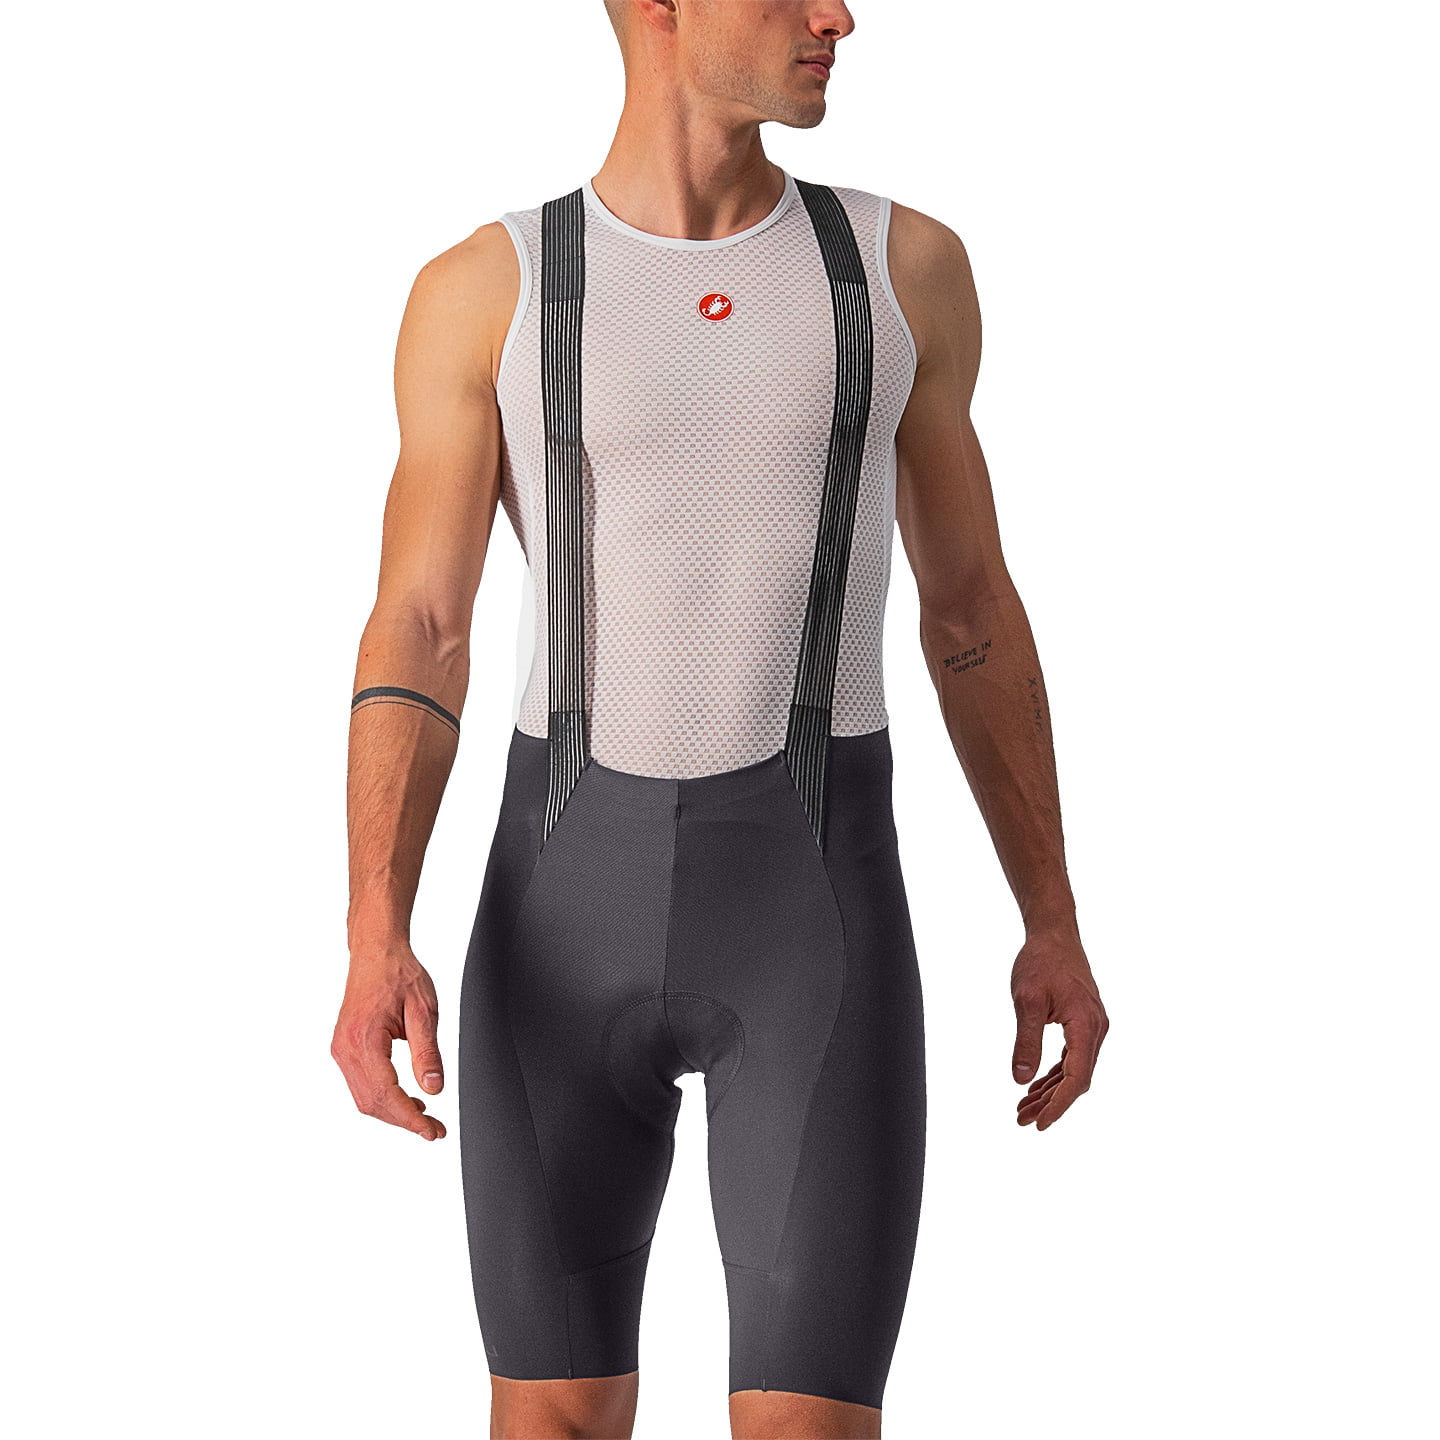 CASTELLI Free Aero RC Bib Shorts Bib Shorts, for men, size L, Cycle shorts, Cycling clothing